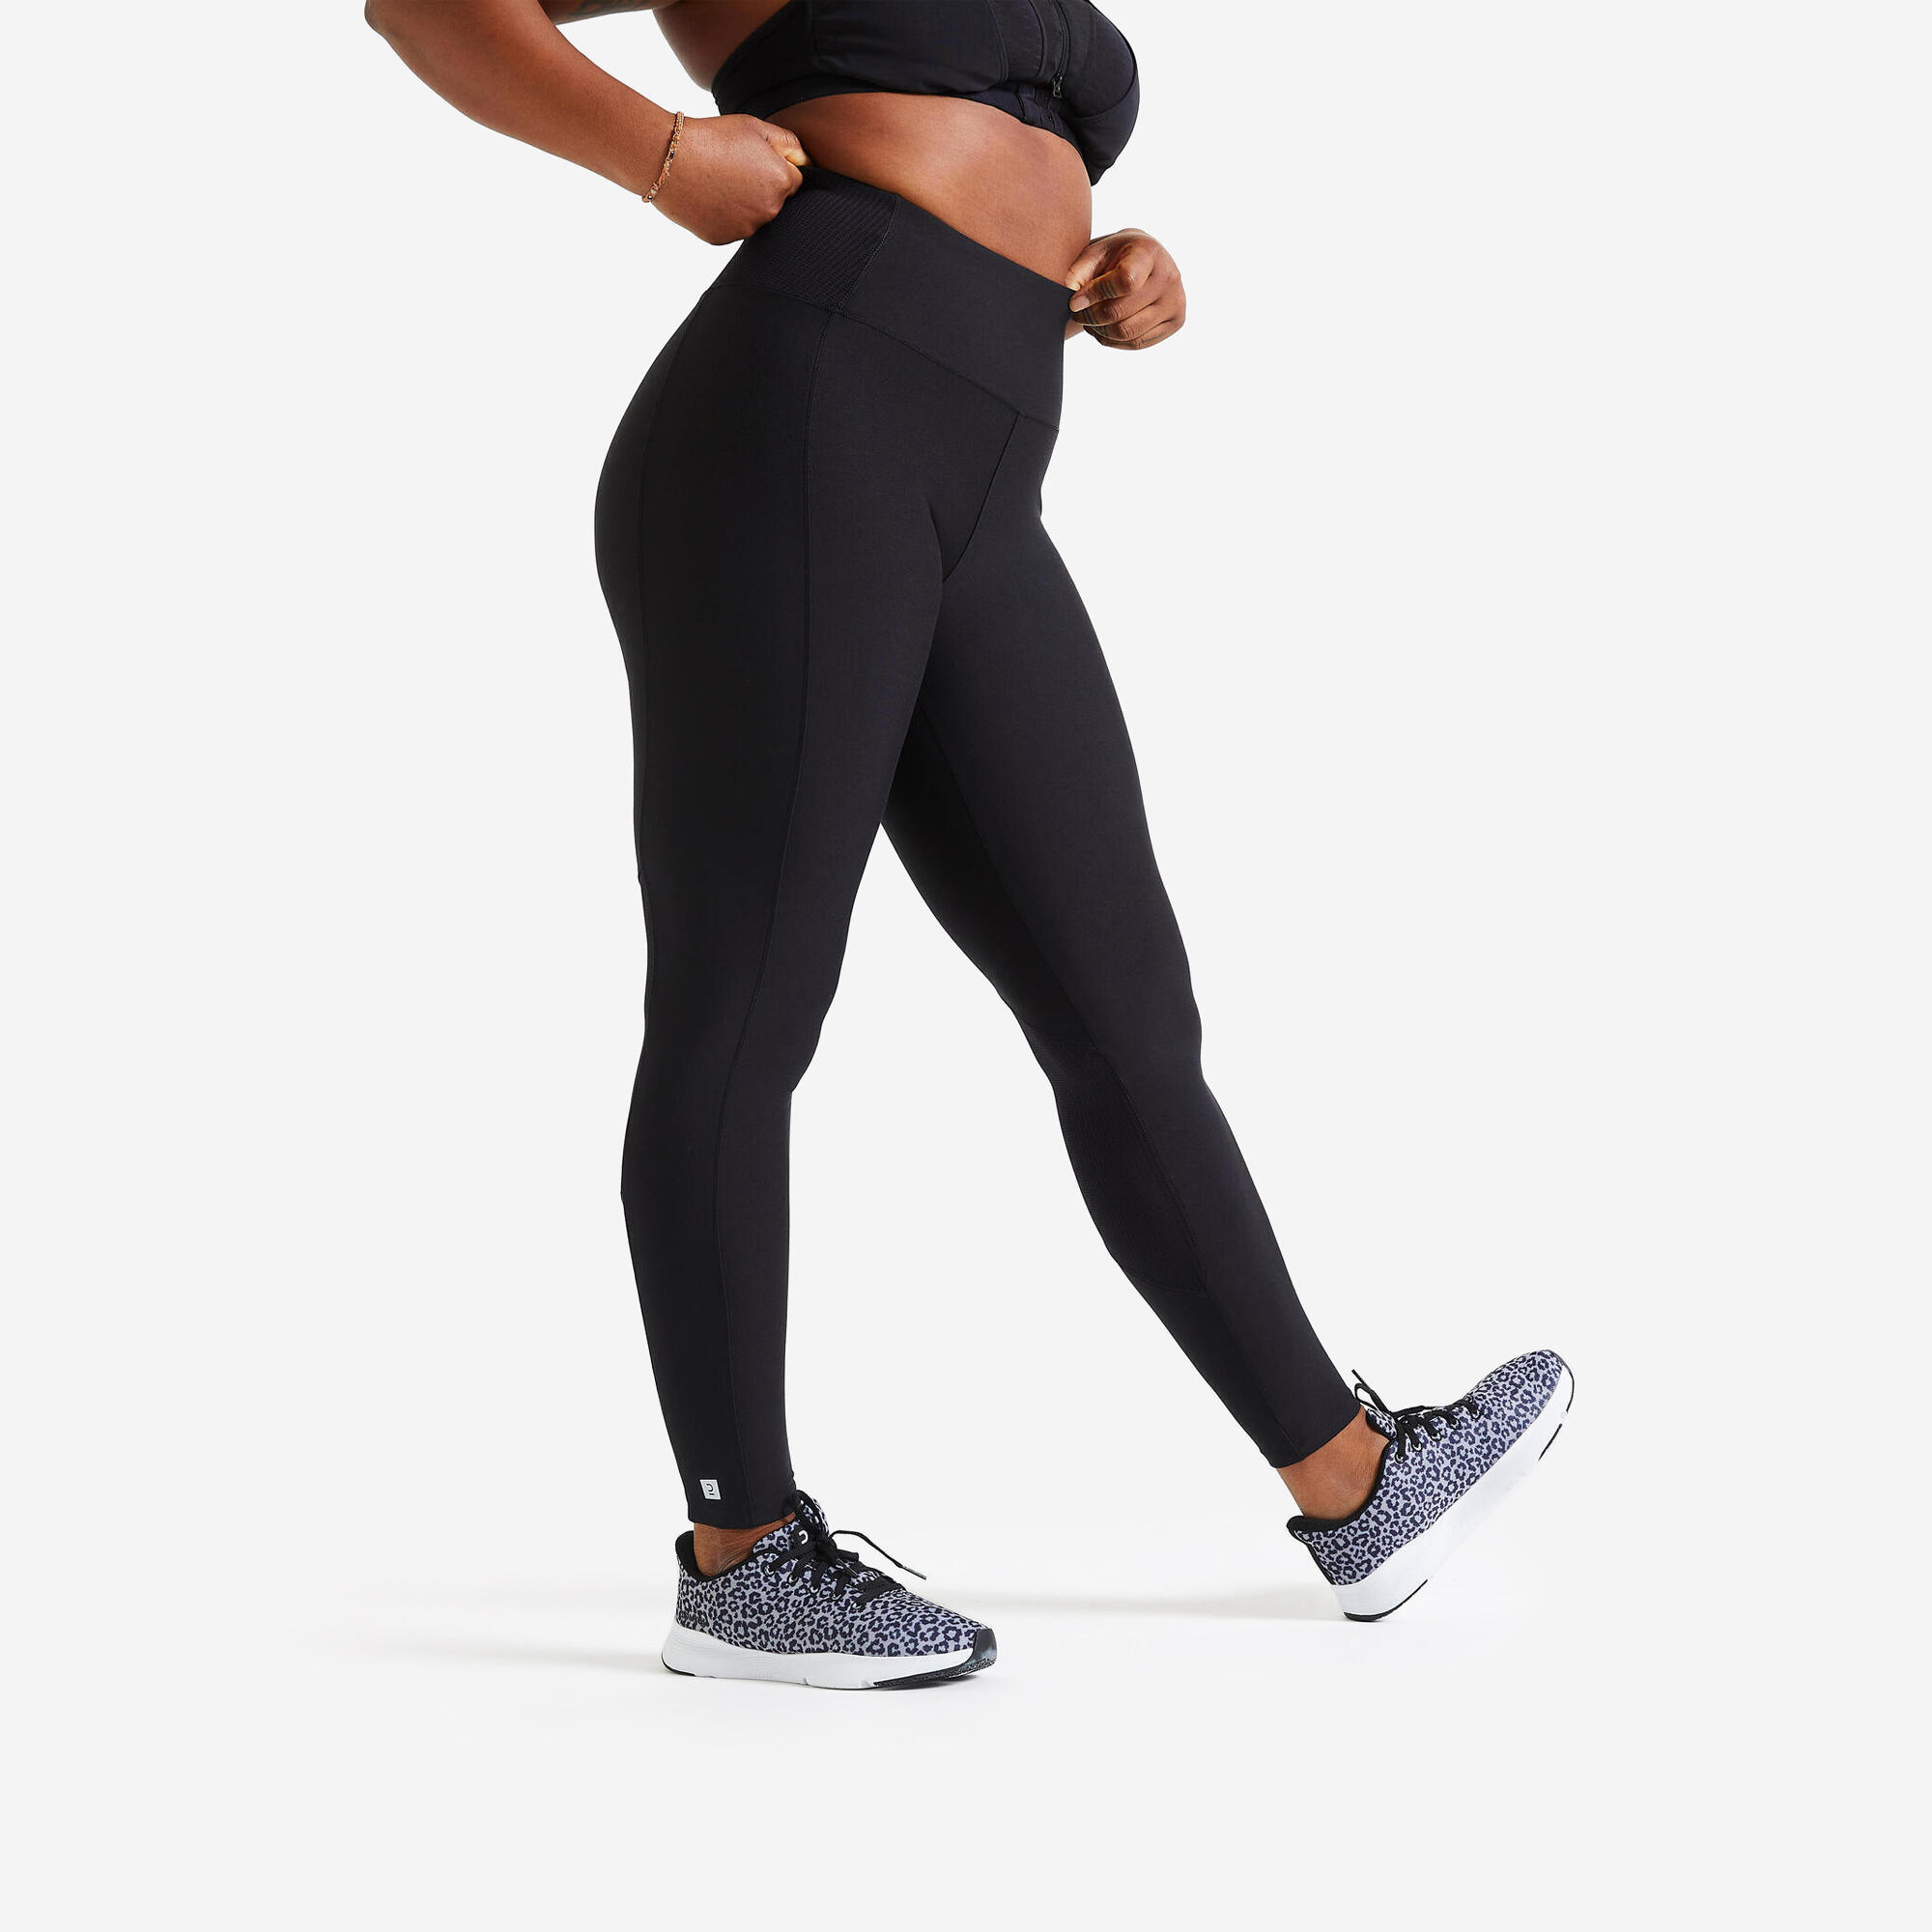 Women's High-Waisted Cardio Fitness Leggings - Black DOMYOS